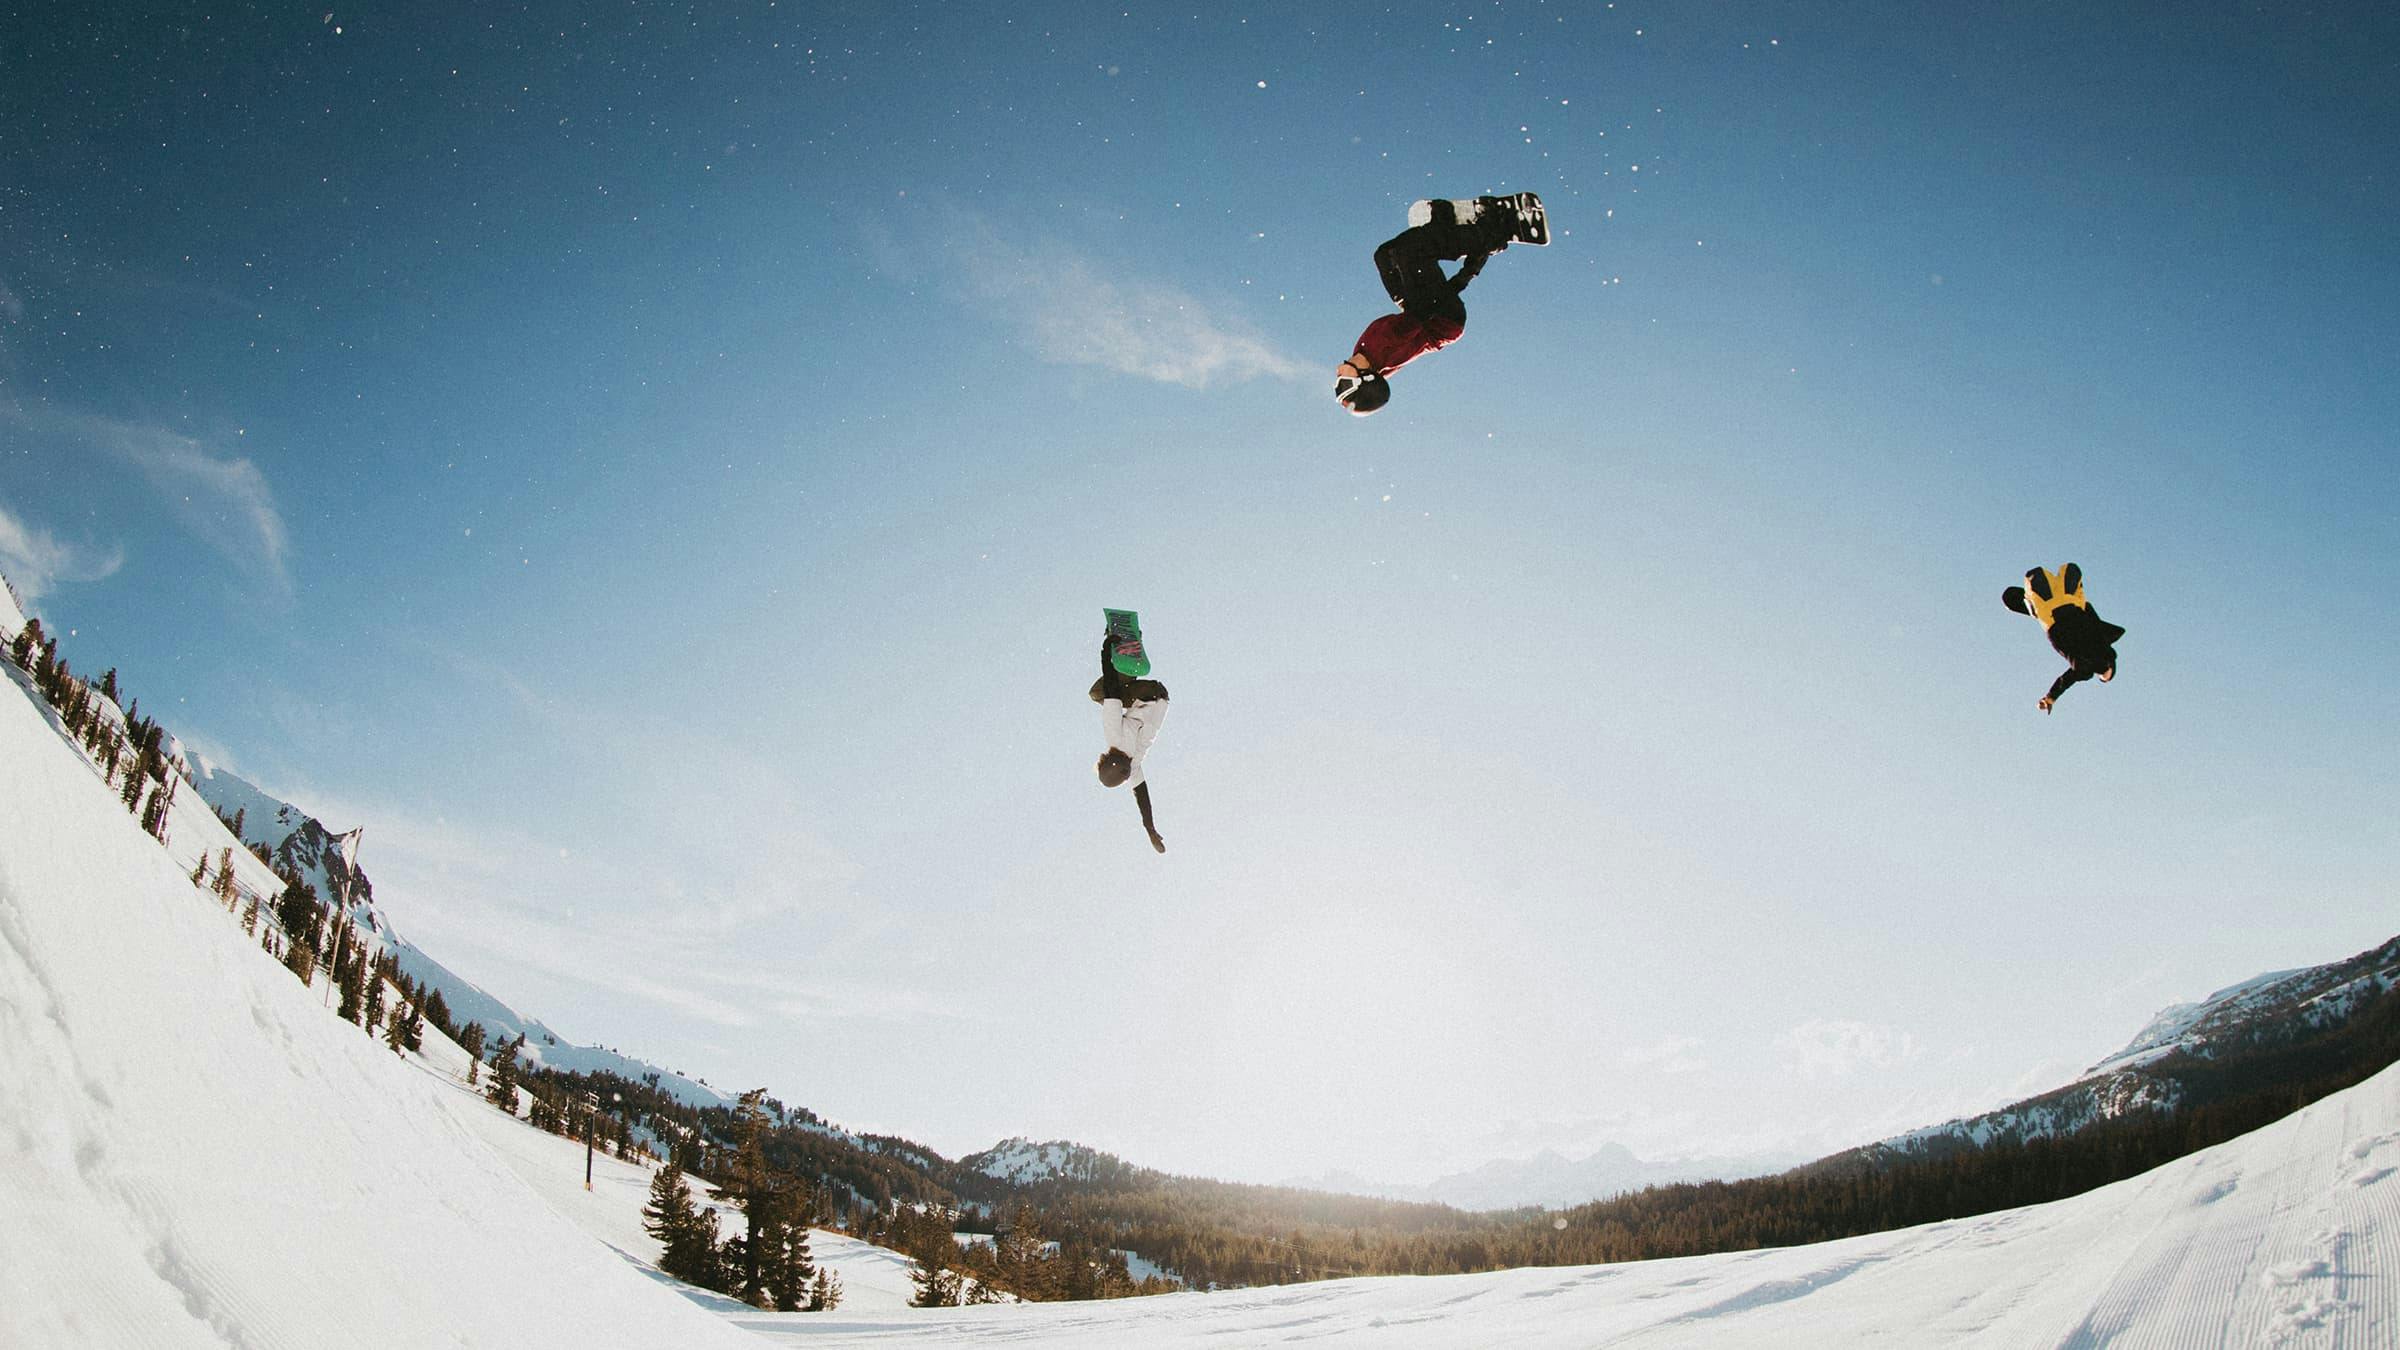 Three snowboarders catching air at Unbound Terrain Park